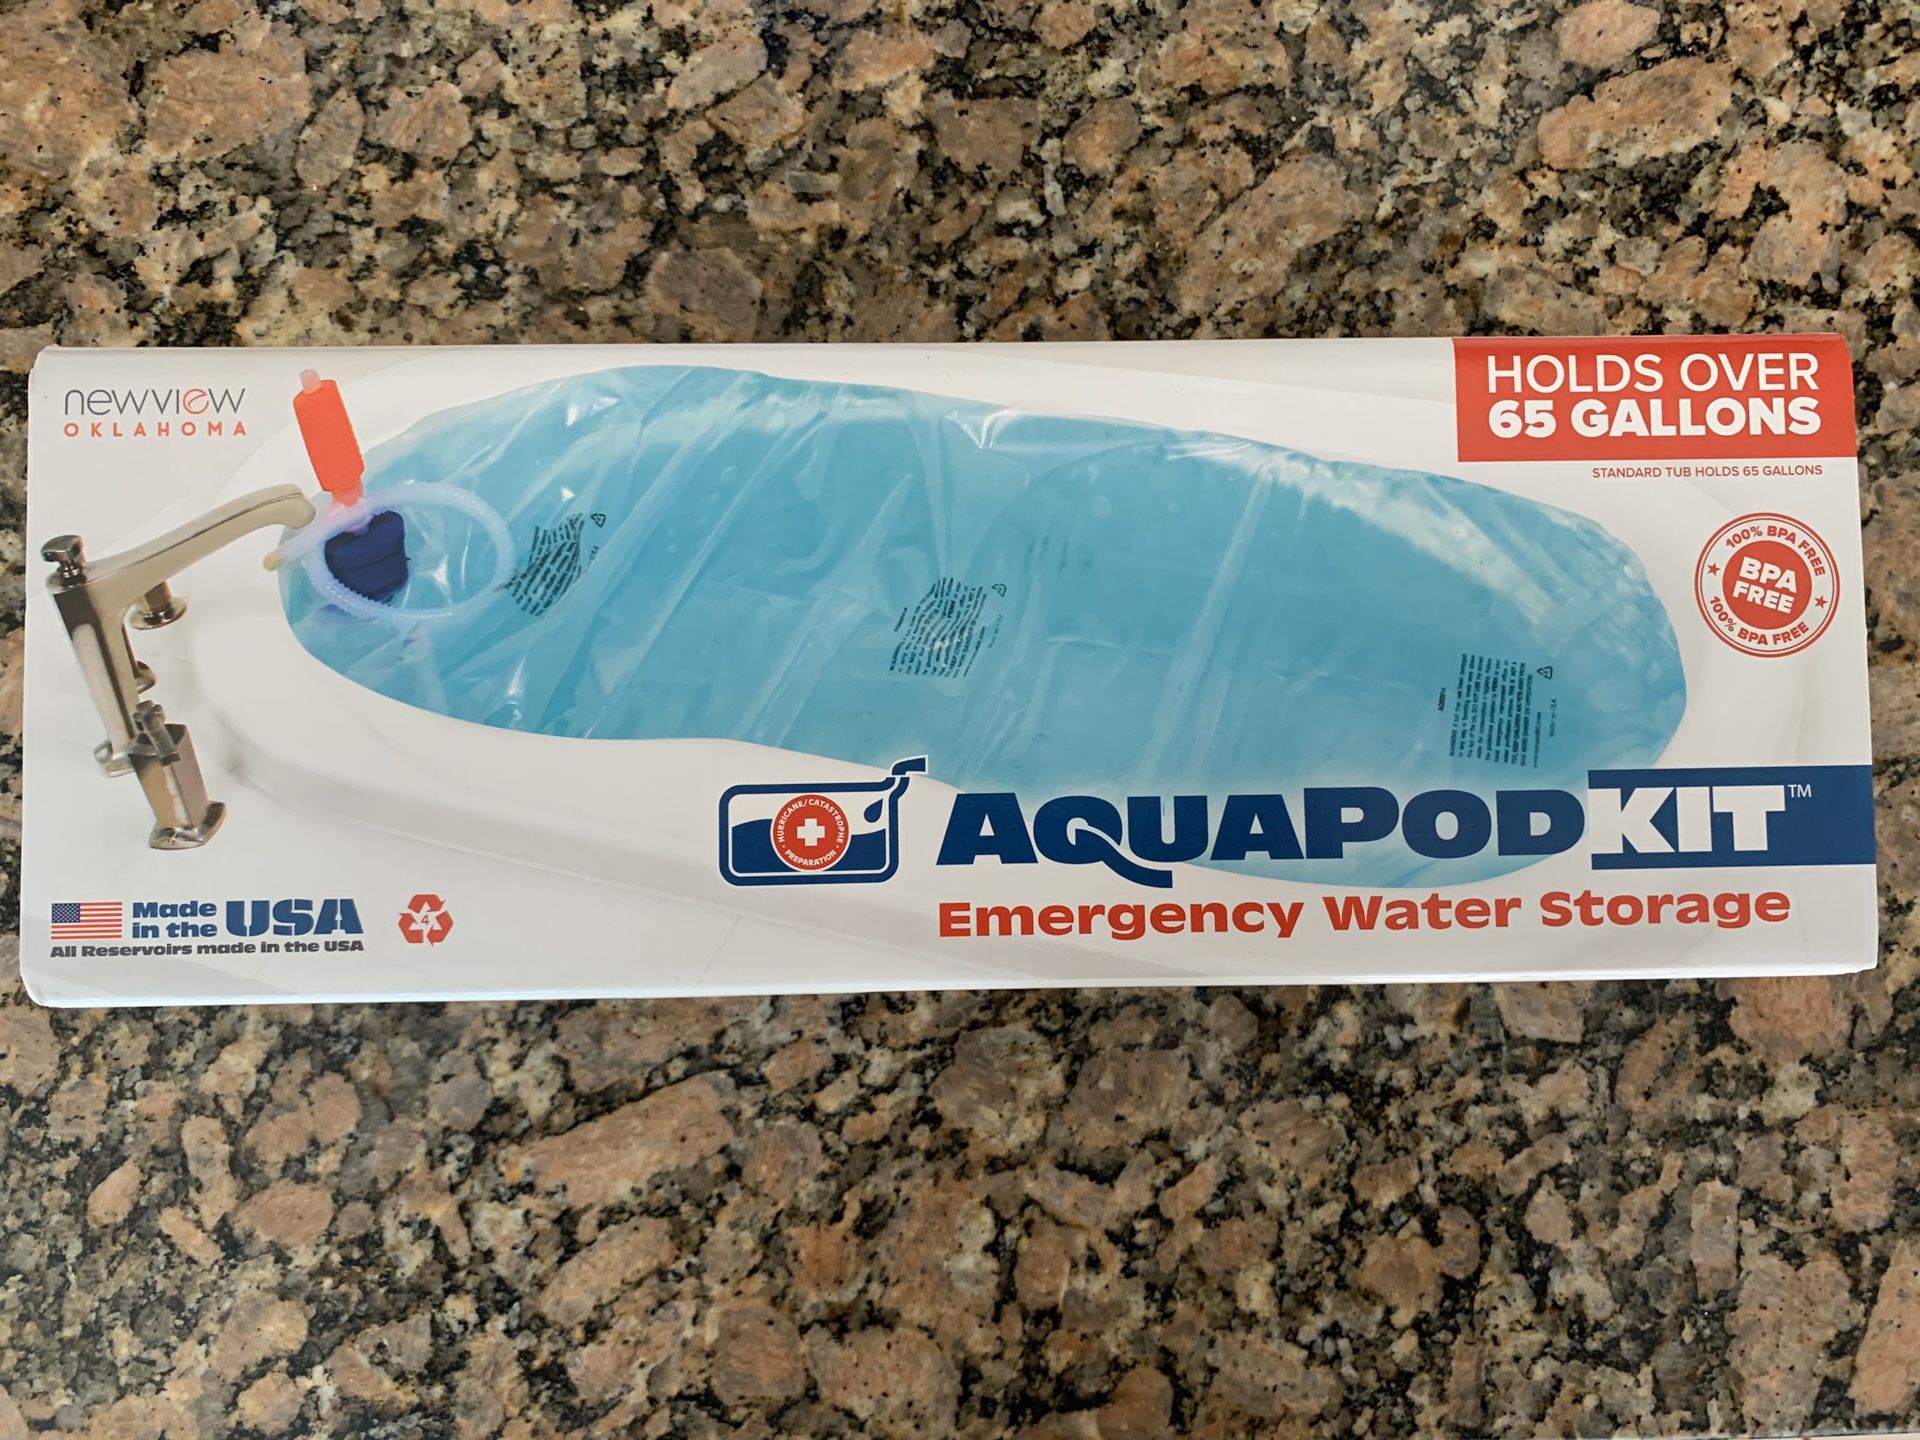 Emergency water kit